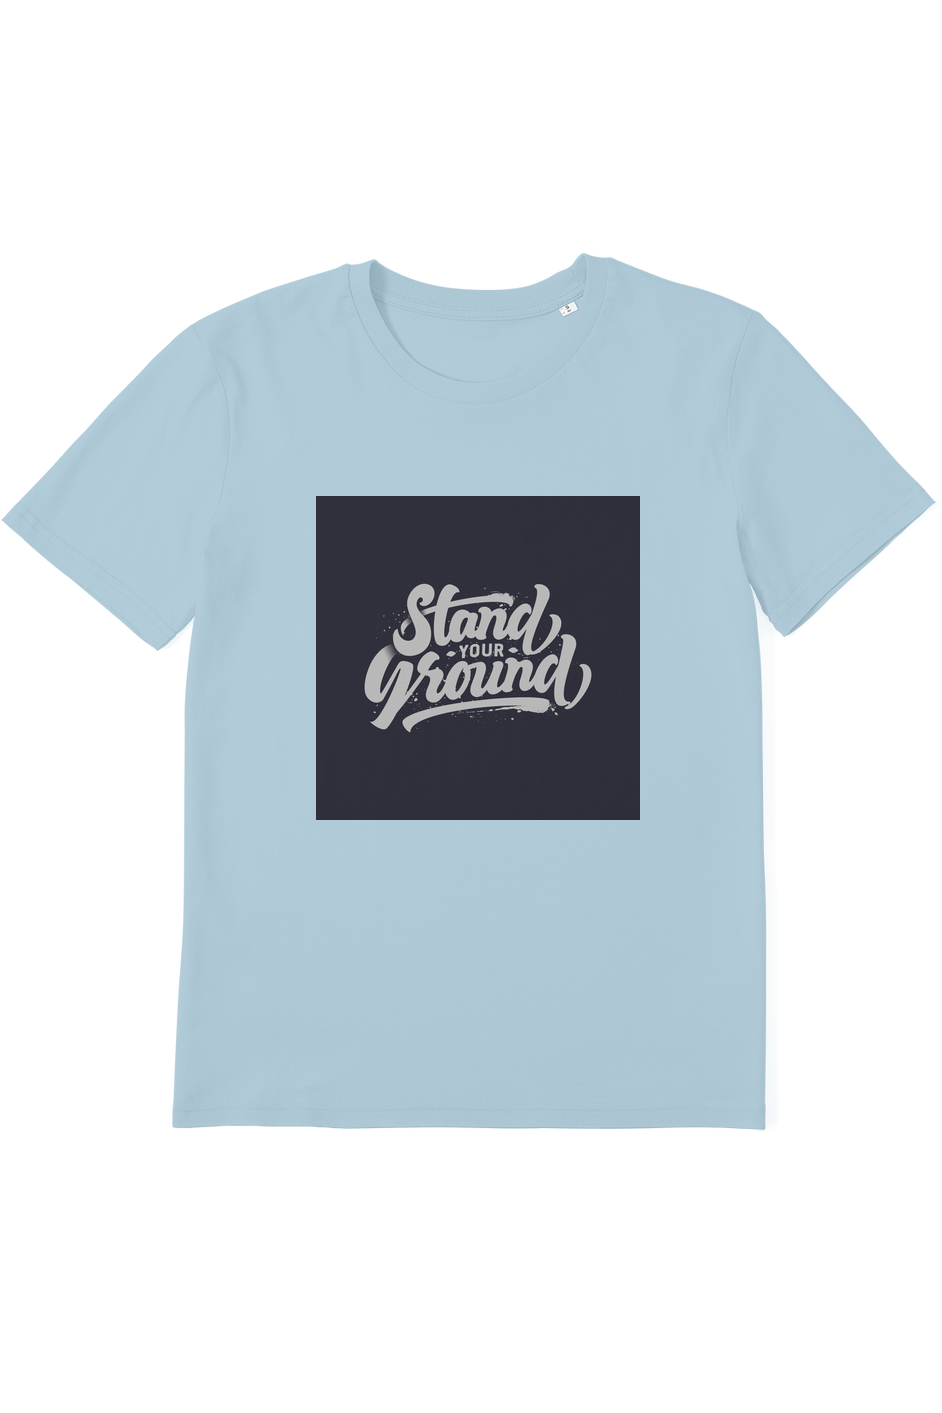 Stand Your Ground Organic T-Shirt vegan, sustainable, organic streetwear, - TRVTH ORGANIC CLOTHING